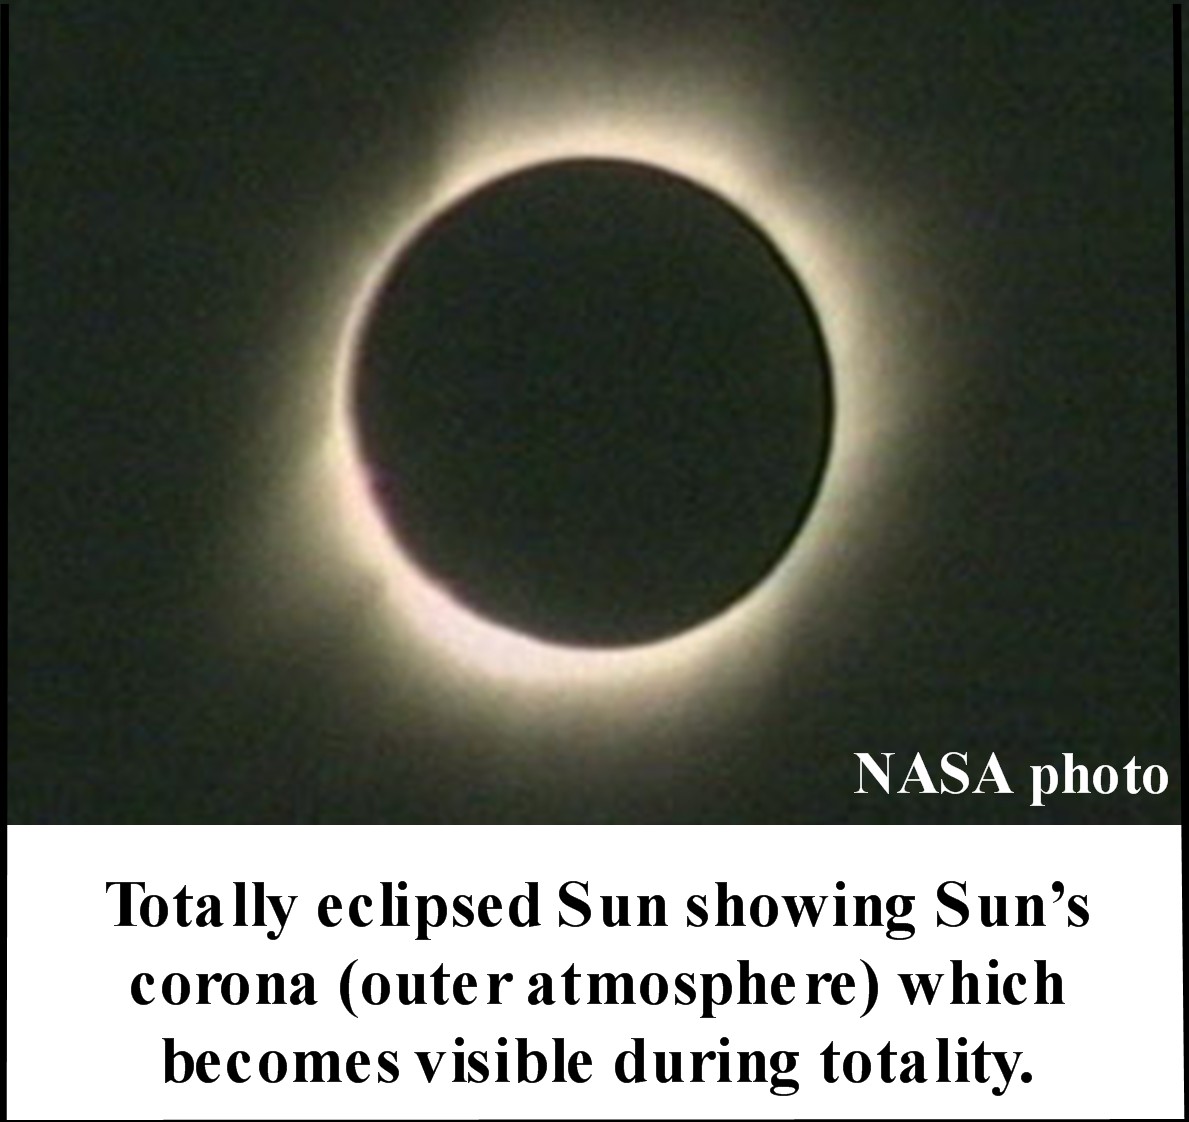 Eclipsed Sun showing corona